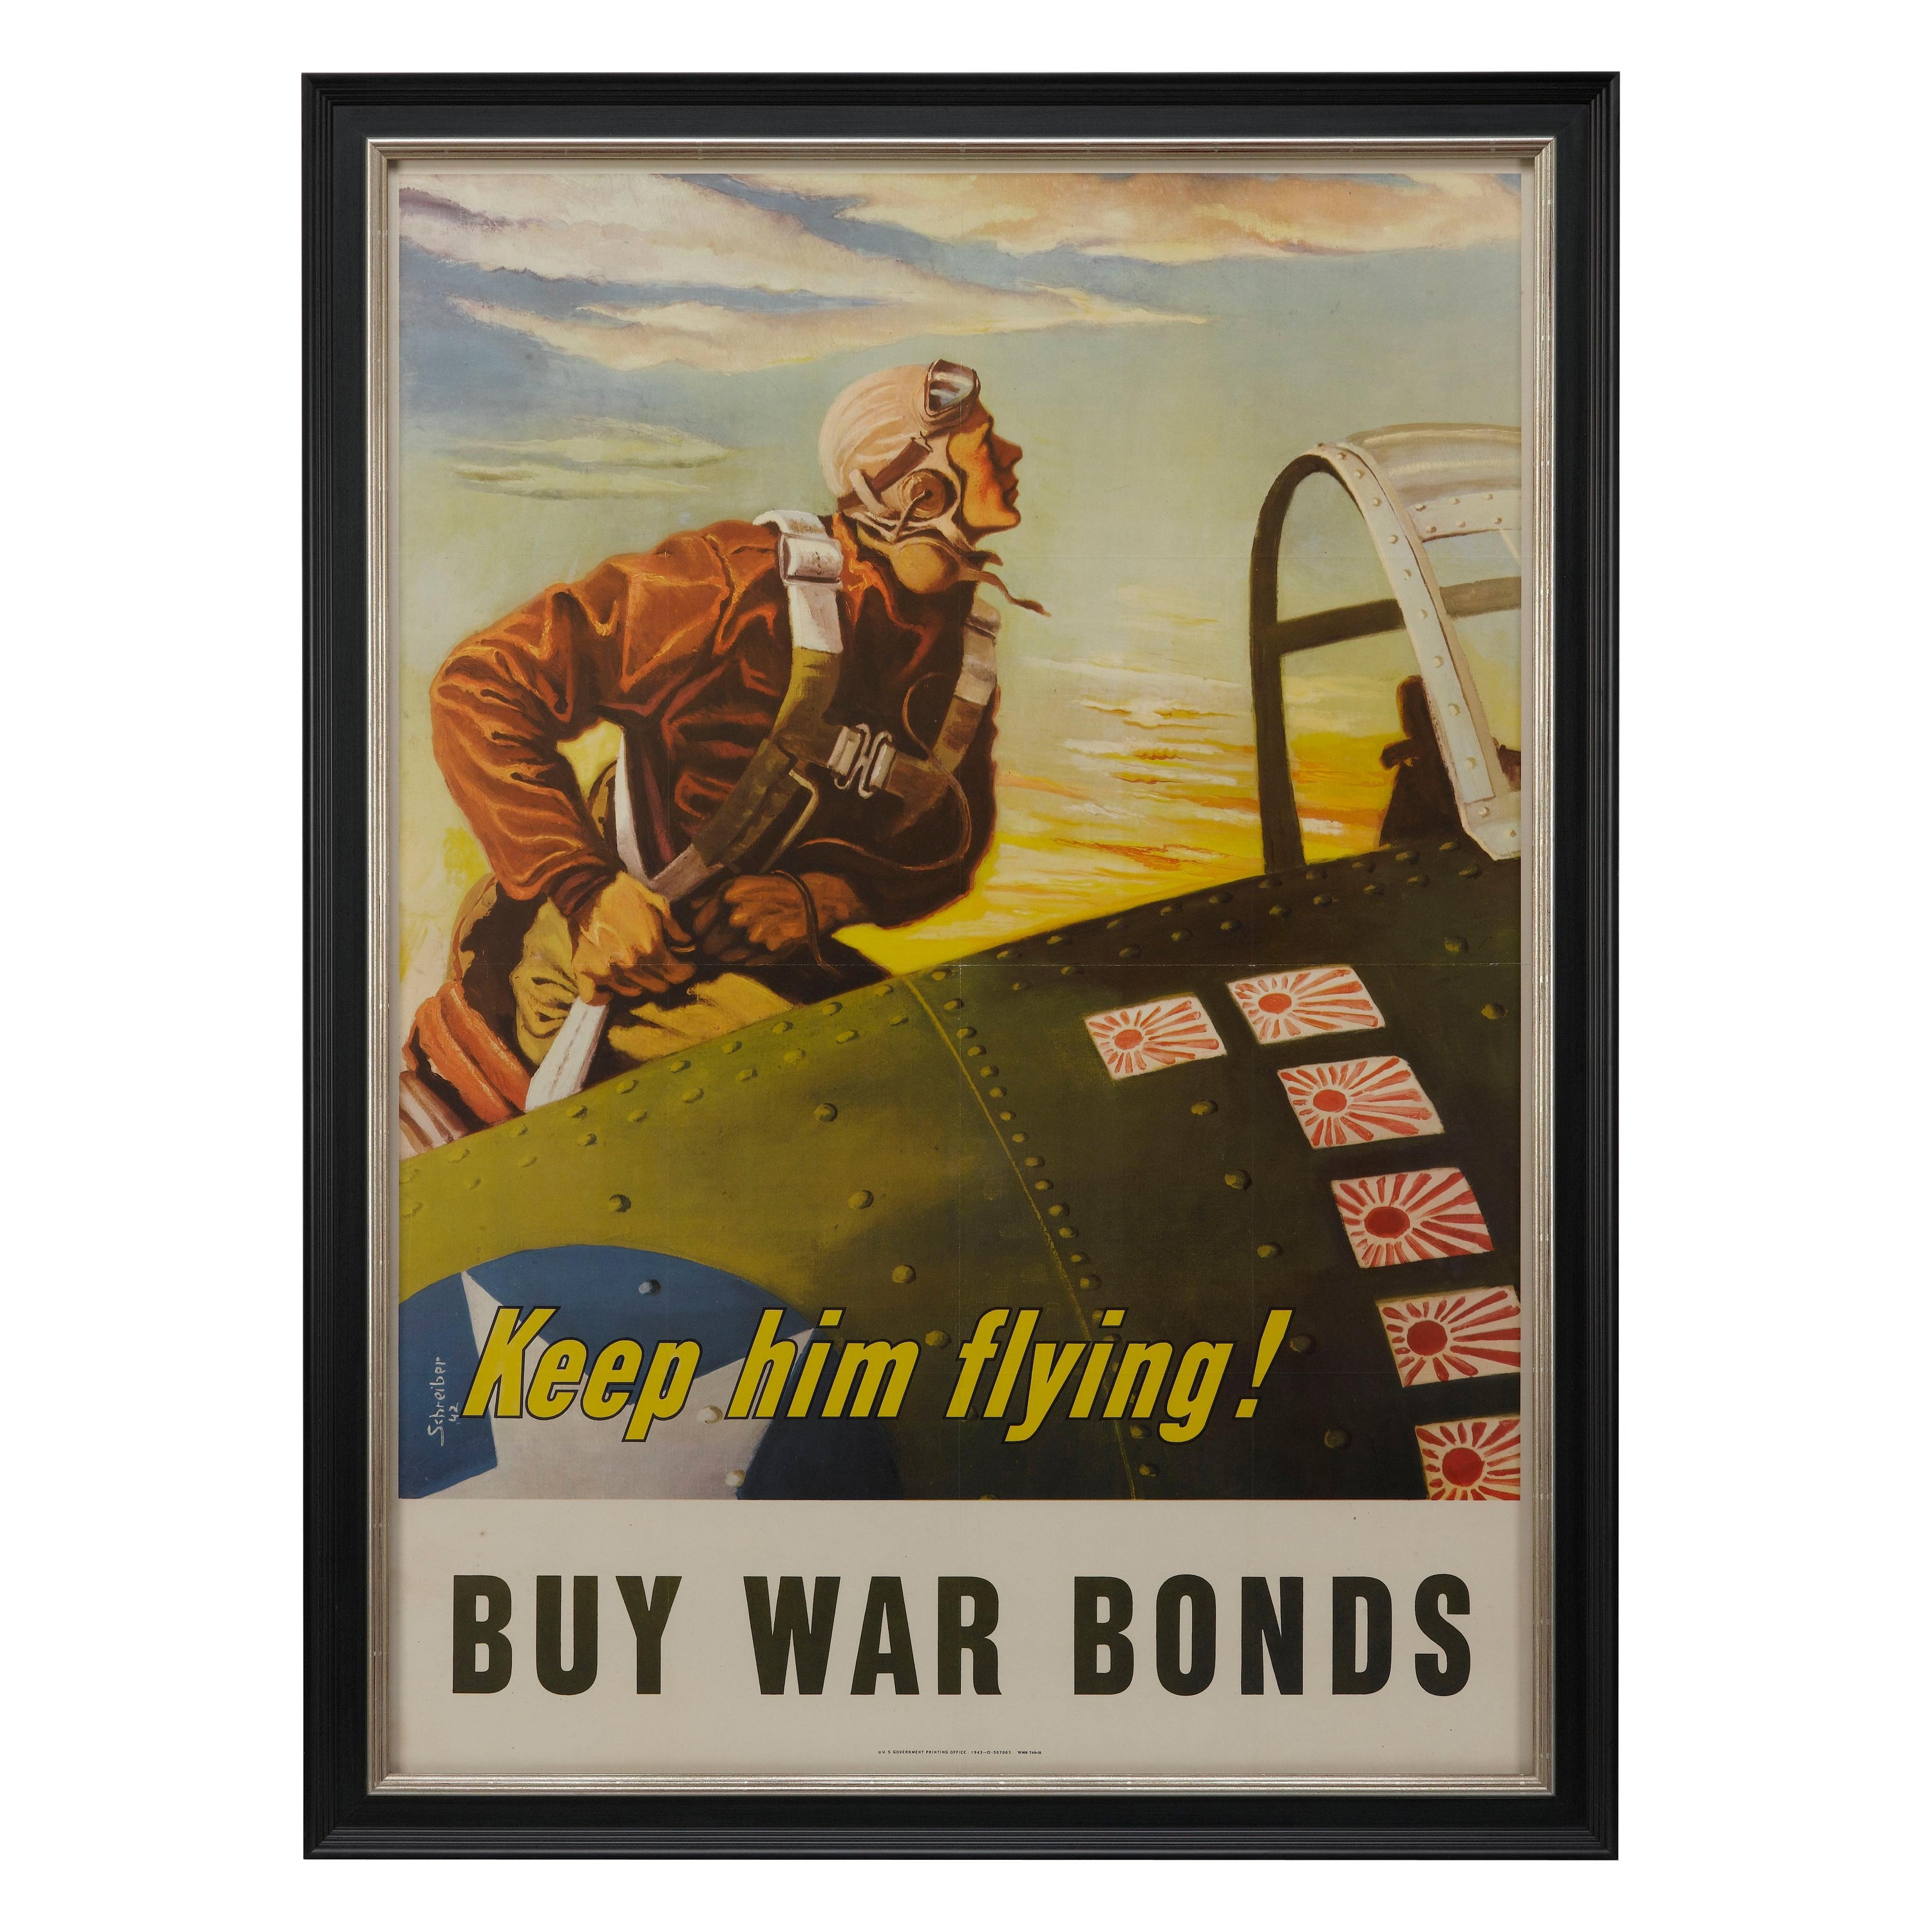 "Keep Him Flying! Buy War Bonds" Vintage WWII Poster by George Schreiber, 1943